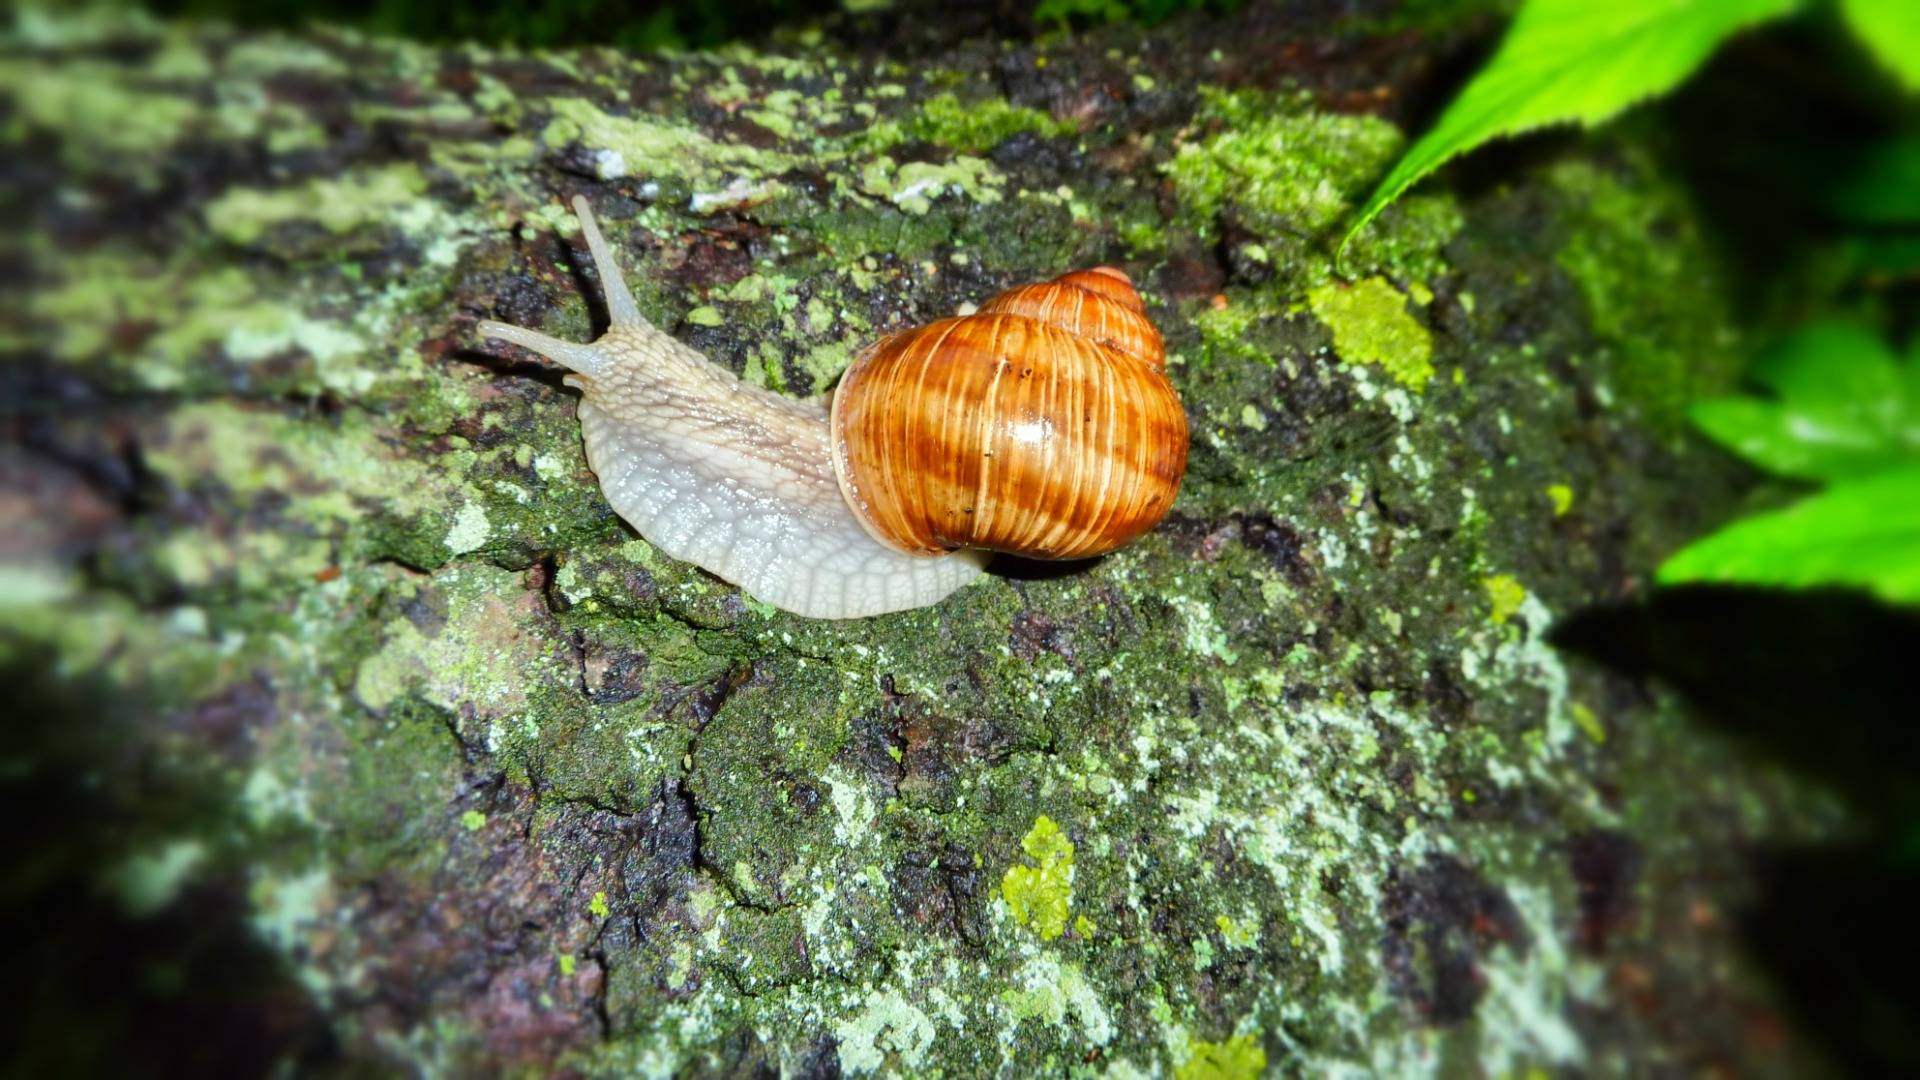 A snail by night